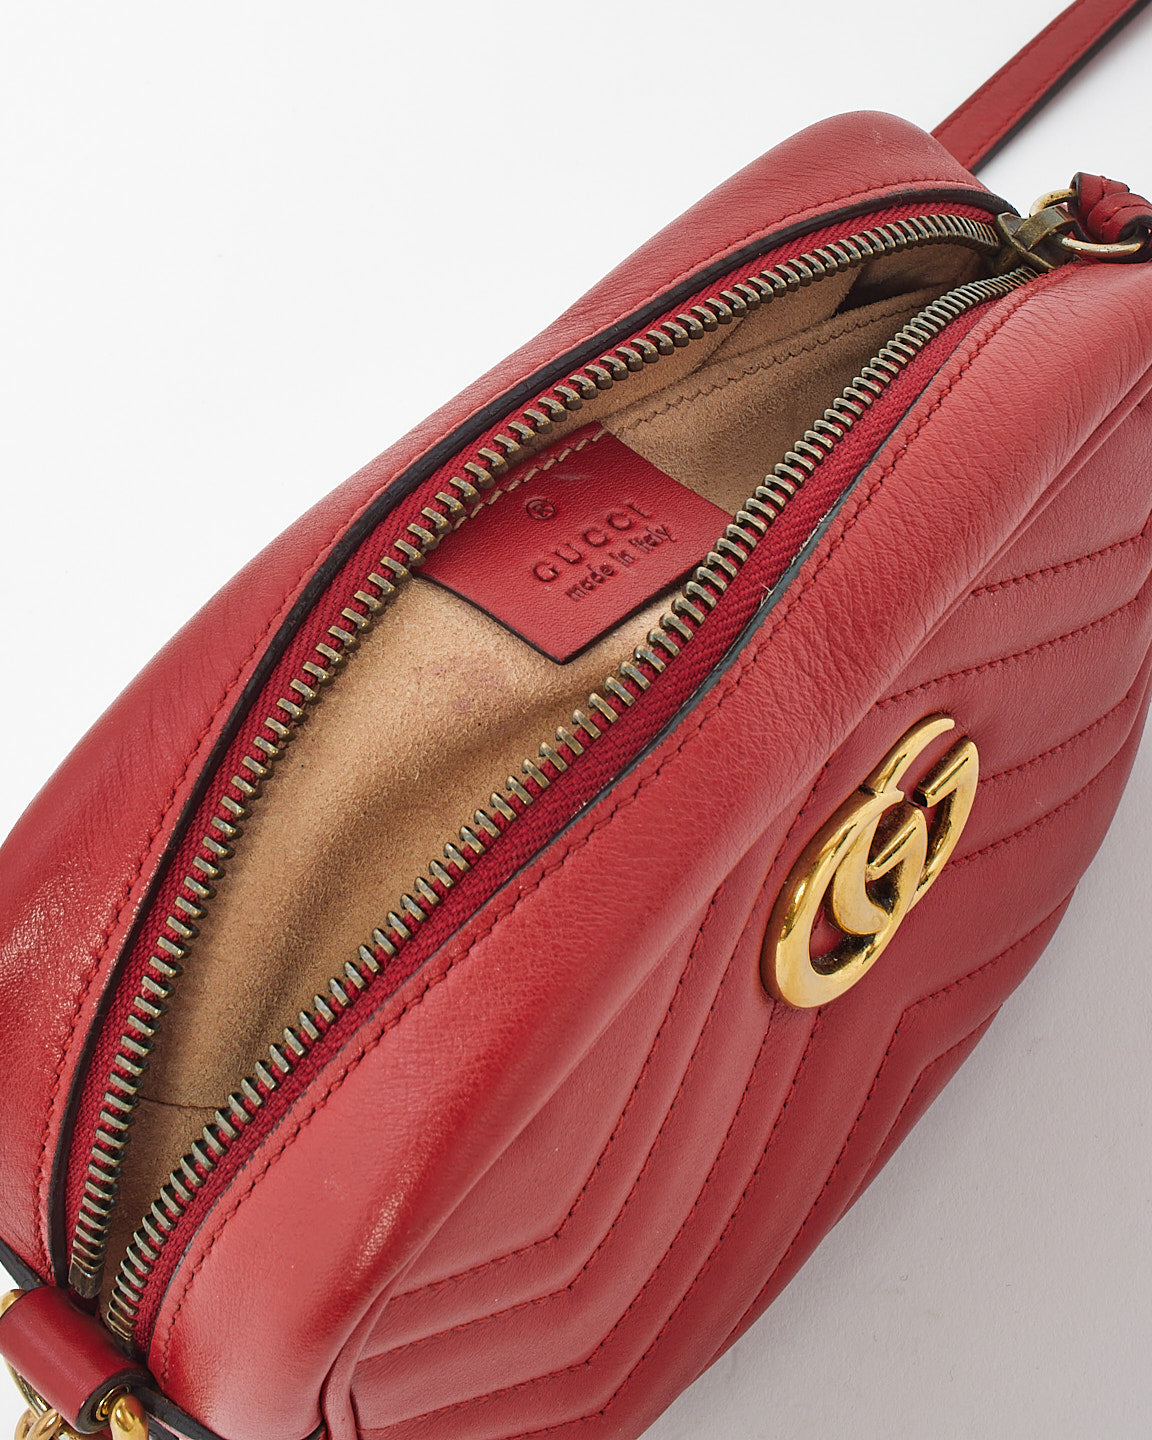 Gucci Red Matelassé Leather Marmont Mini Camera Bag